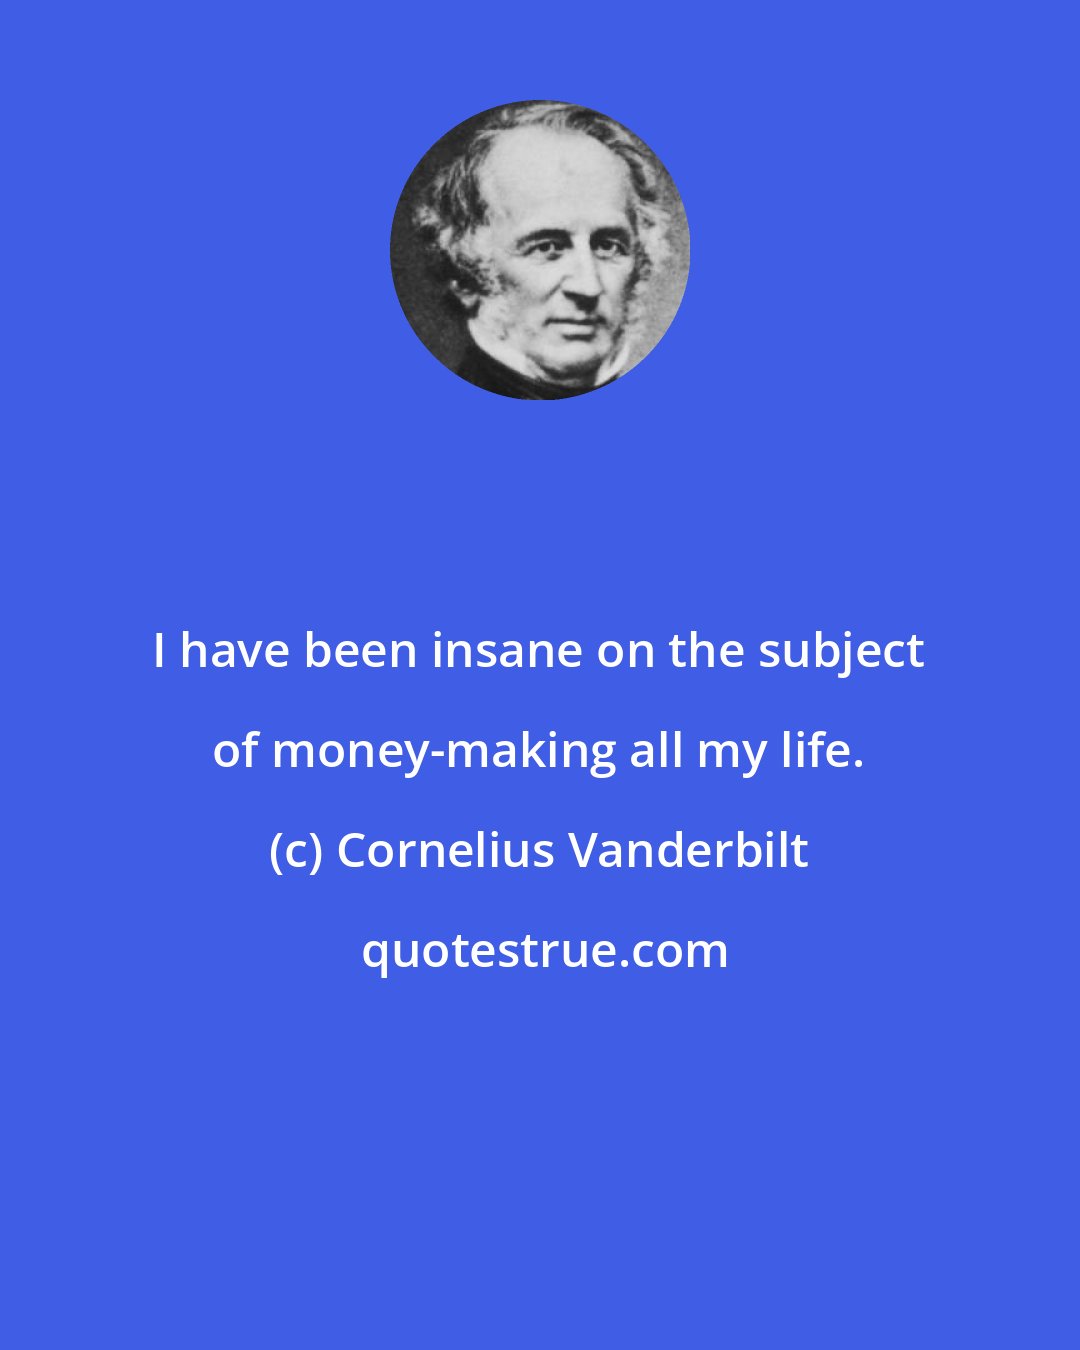 Cornelius Vanderbilt: I have been insane on the subject of money-making all my life.